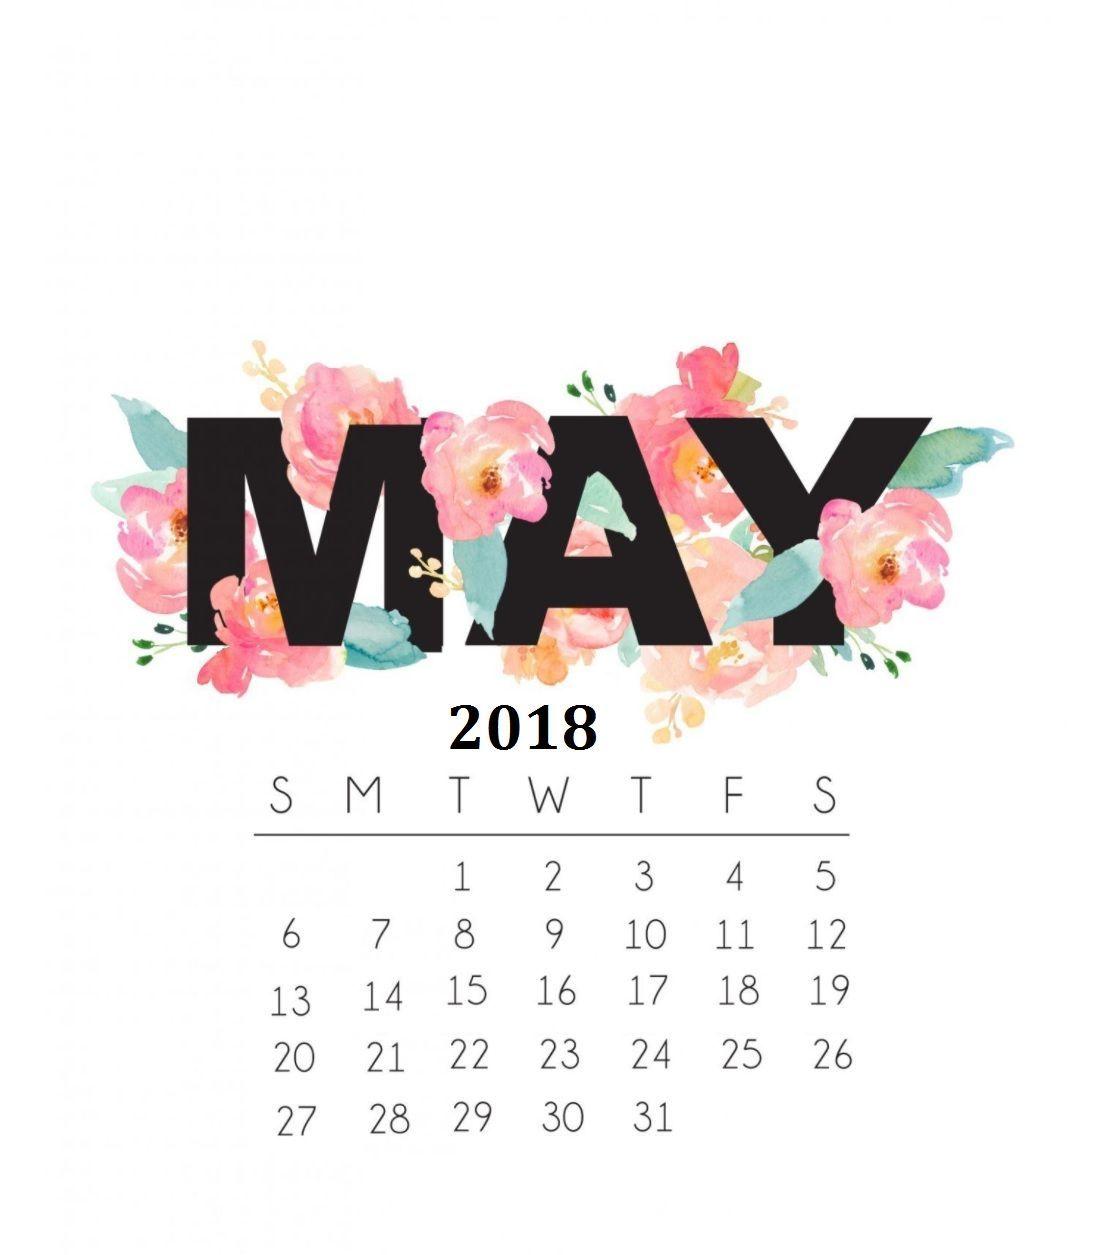 May 2018 Calendar Wallpaper HD. Calendar 2018